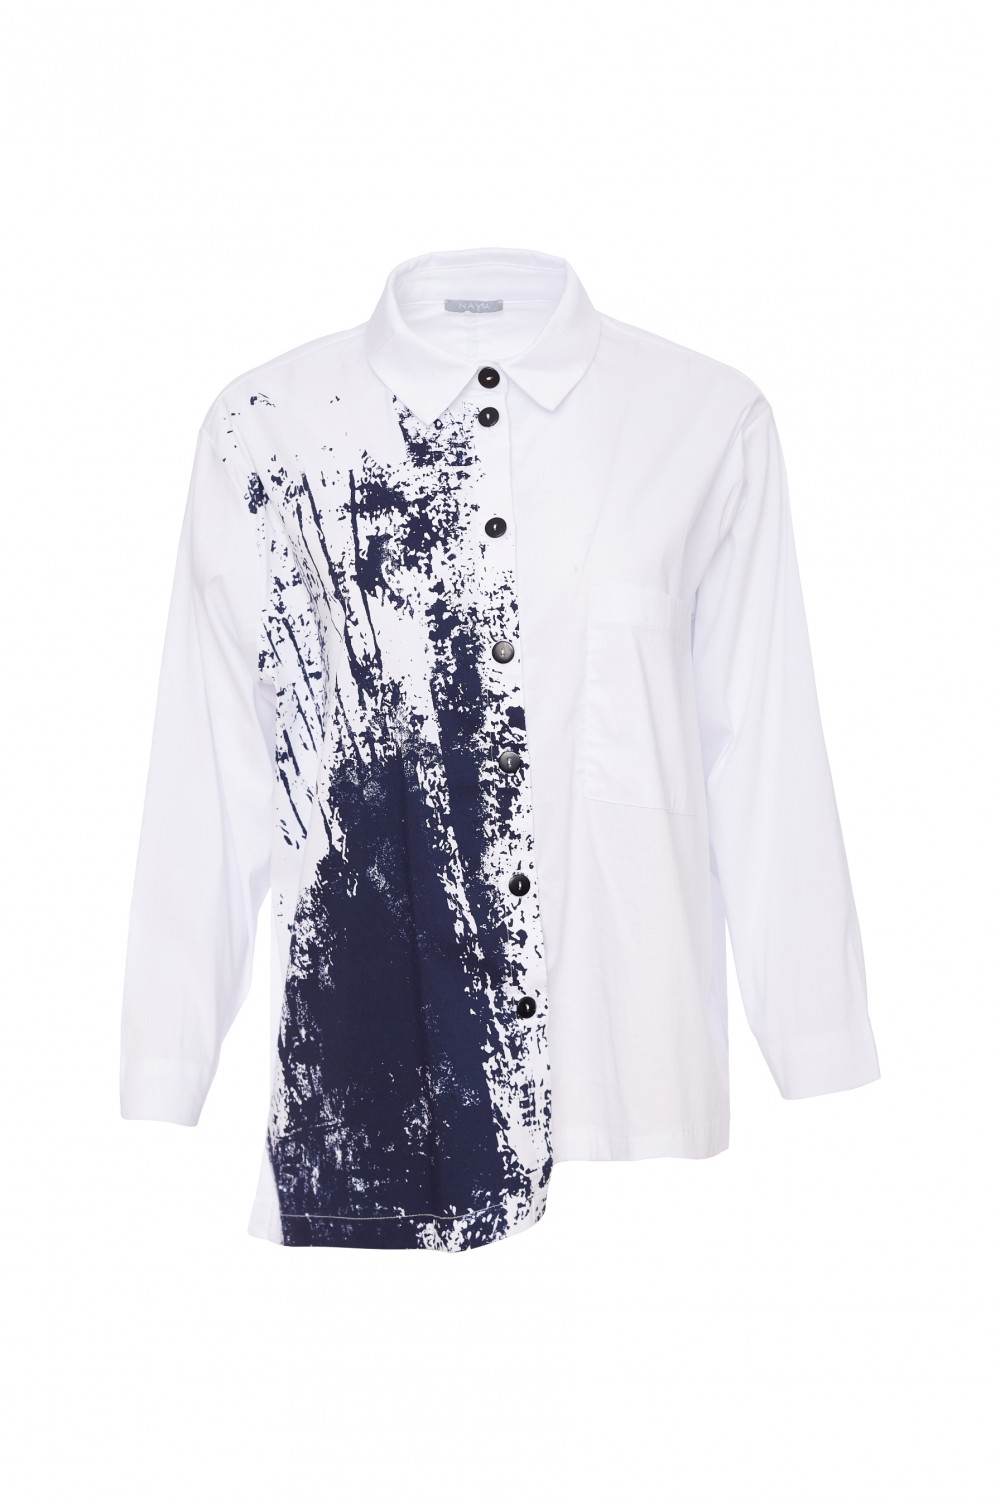 Naya Placement Print Shirt White/Navy